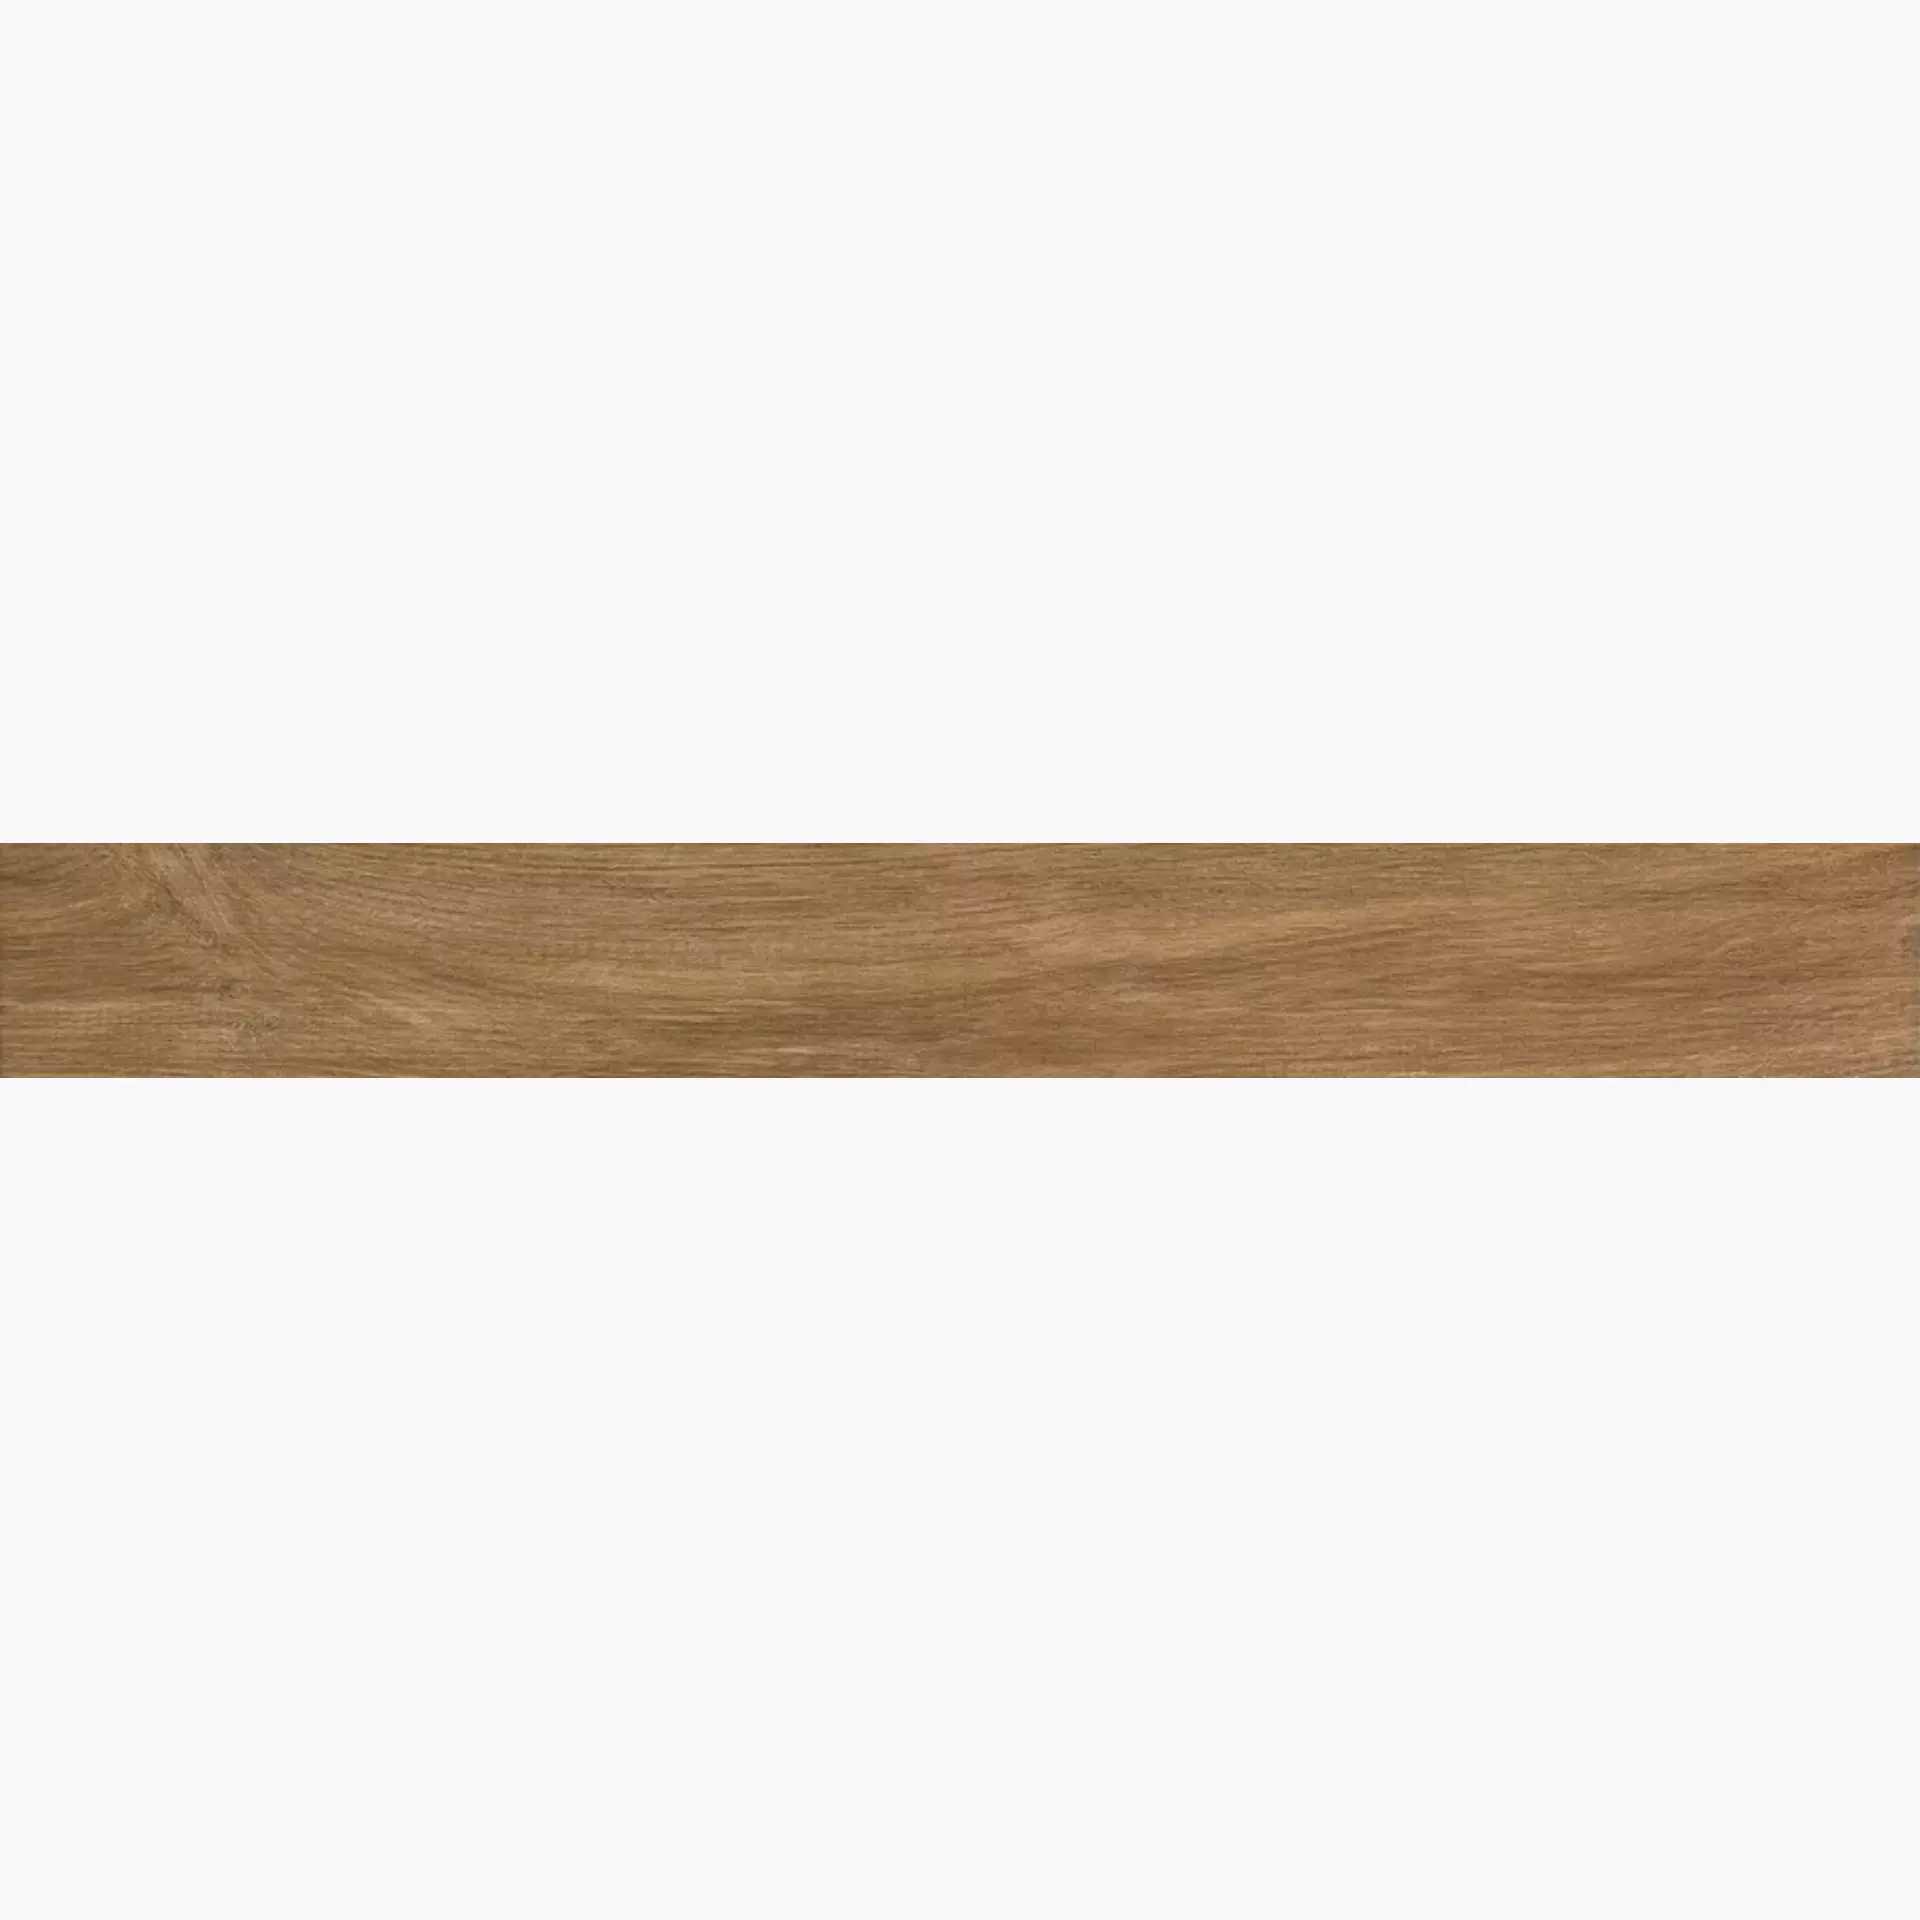 Iris E-Wood Blonde Antislip 898018 11x90cm 9mm